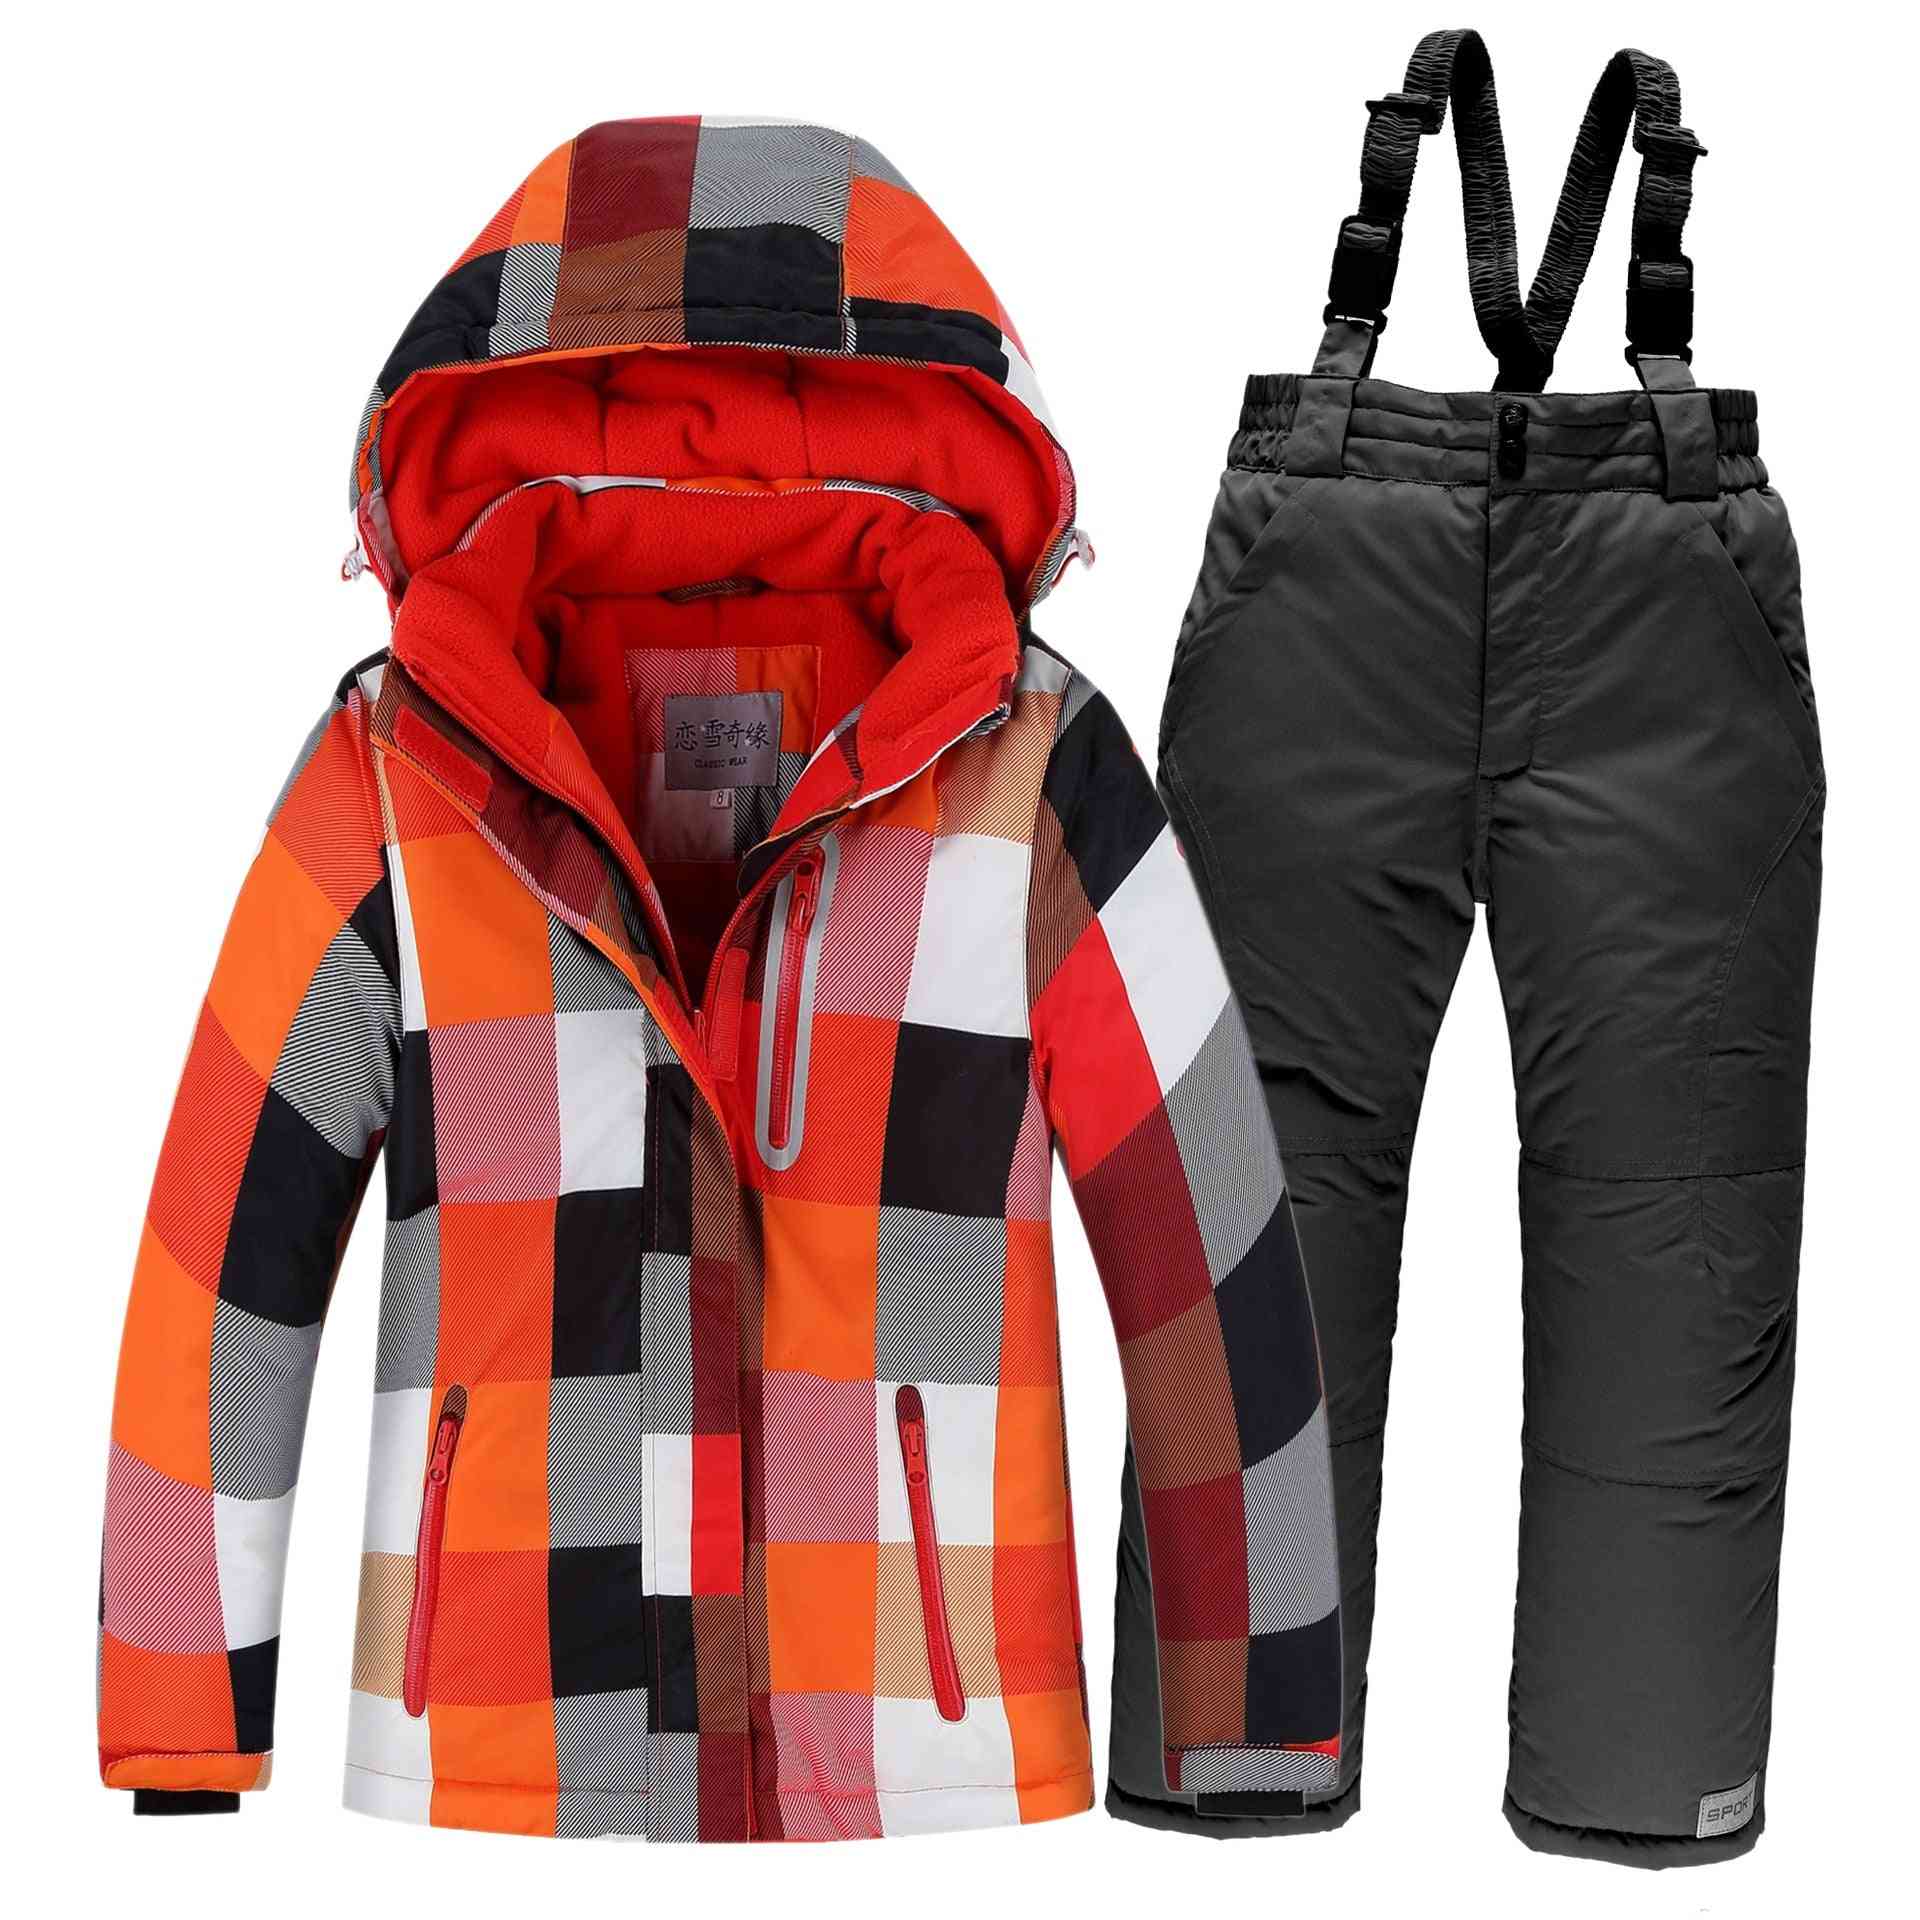 Jacket Pants Ski Set For Kids